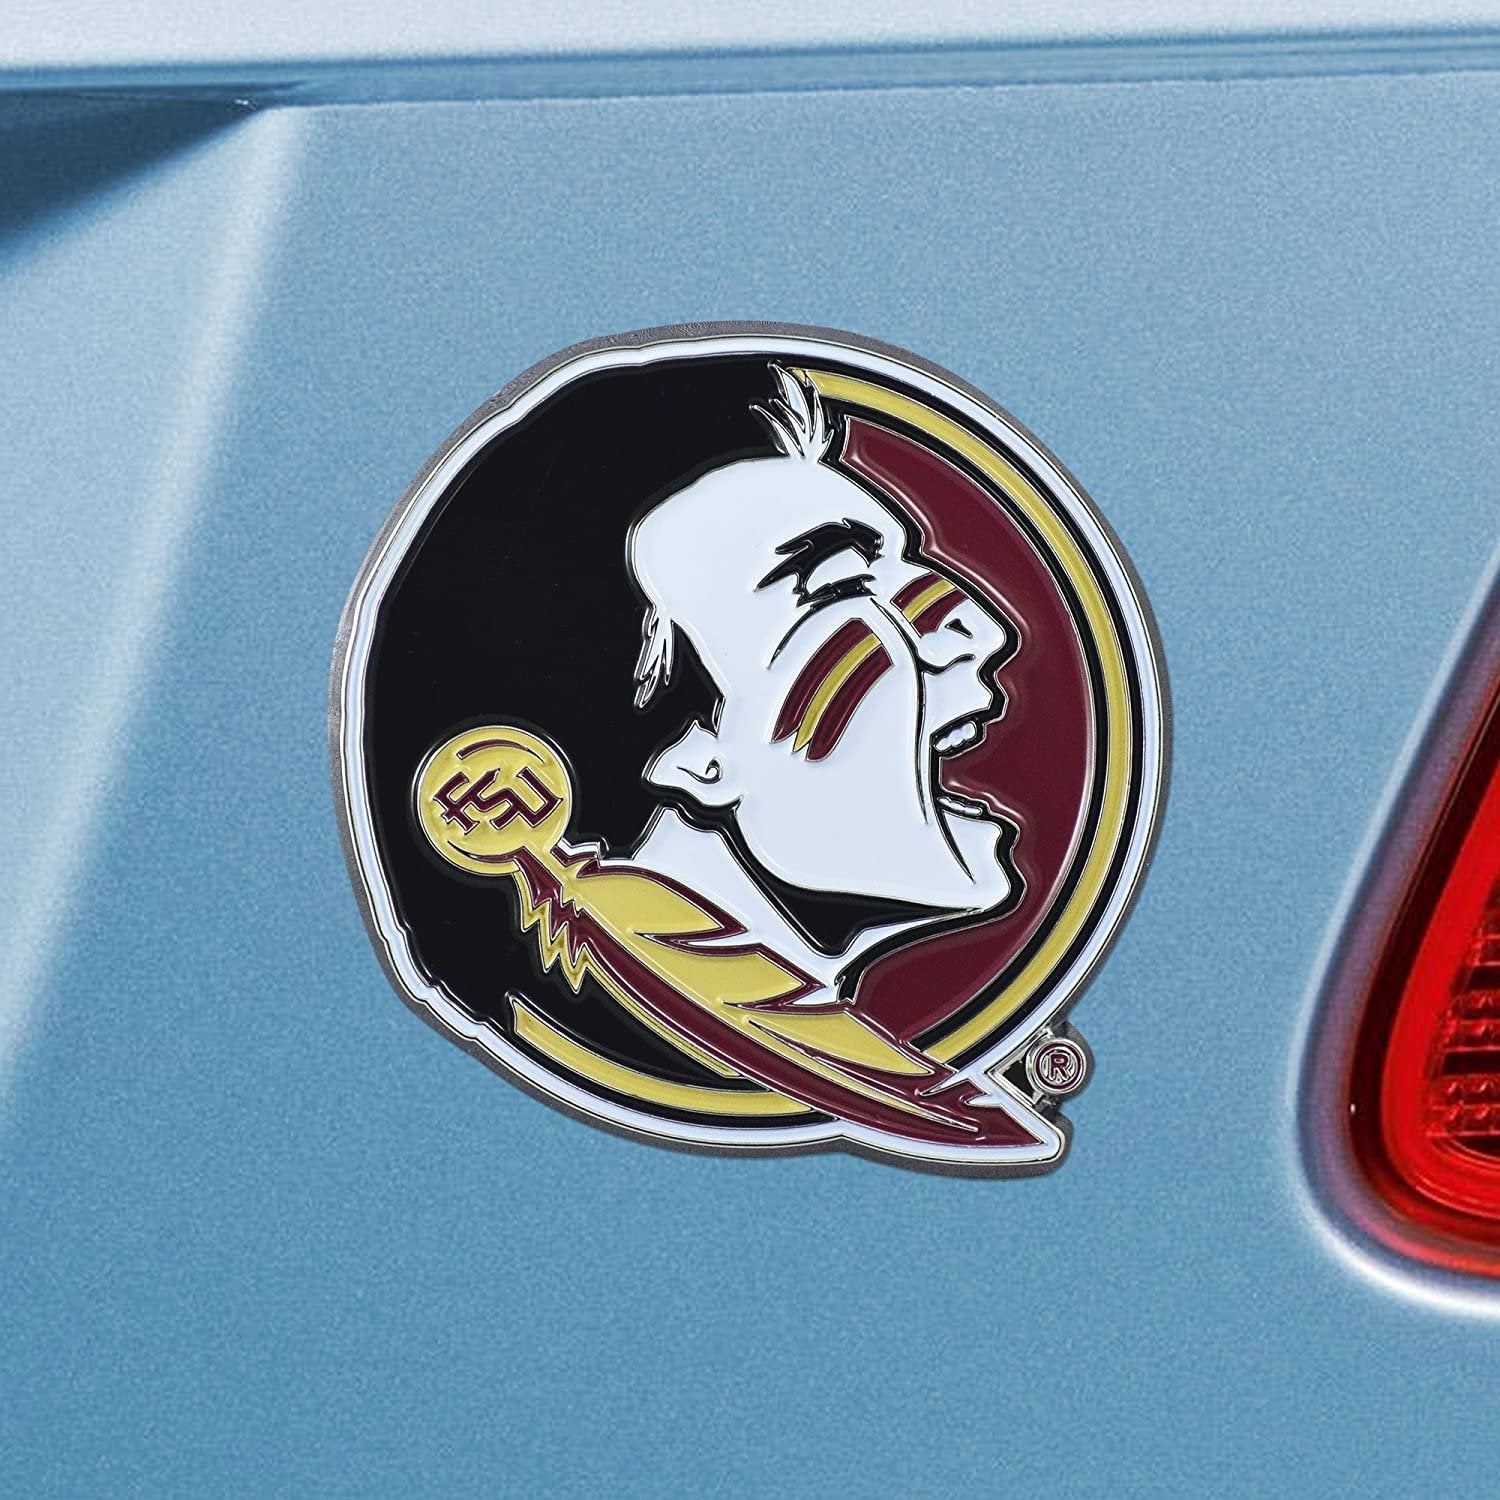 Florida State University Seminoles Premium Solid Metal Raised Auto Emblem, Team Color, Shape Cut, Adhesive Backing